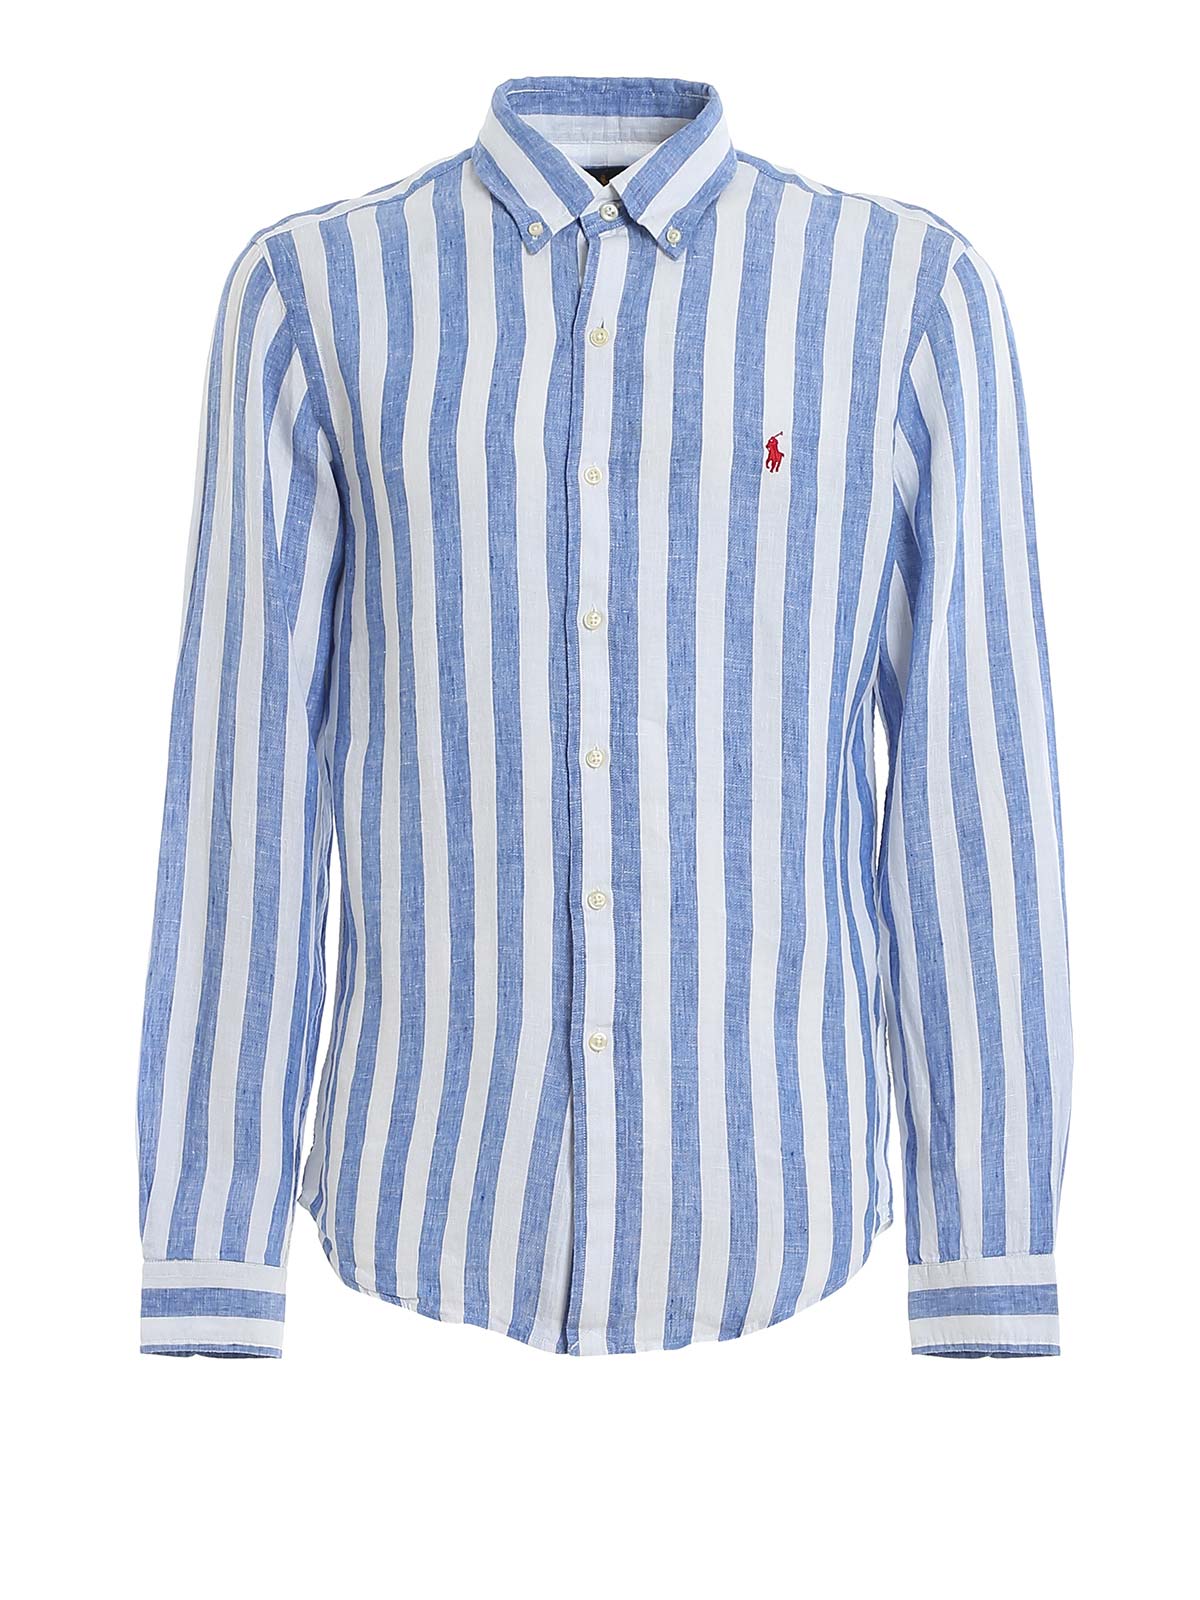 Linen Thick Striped Shirt Blue White 